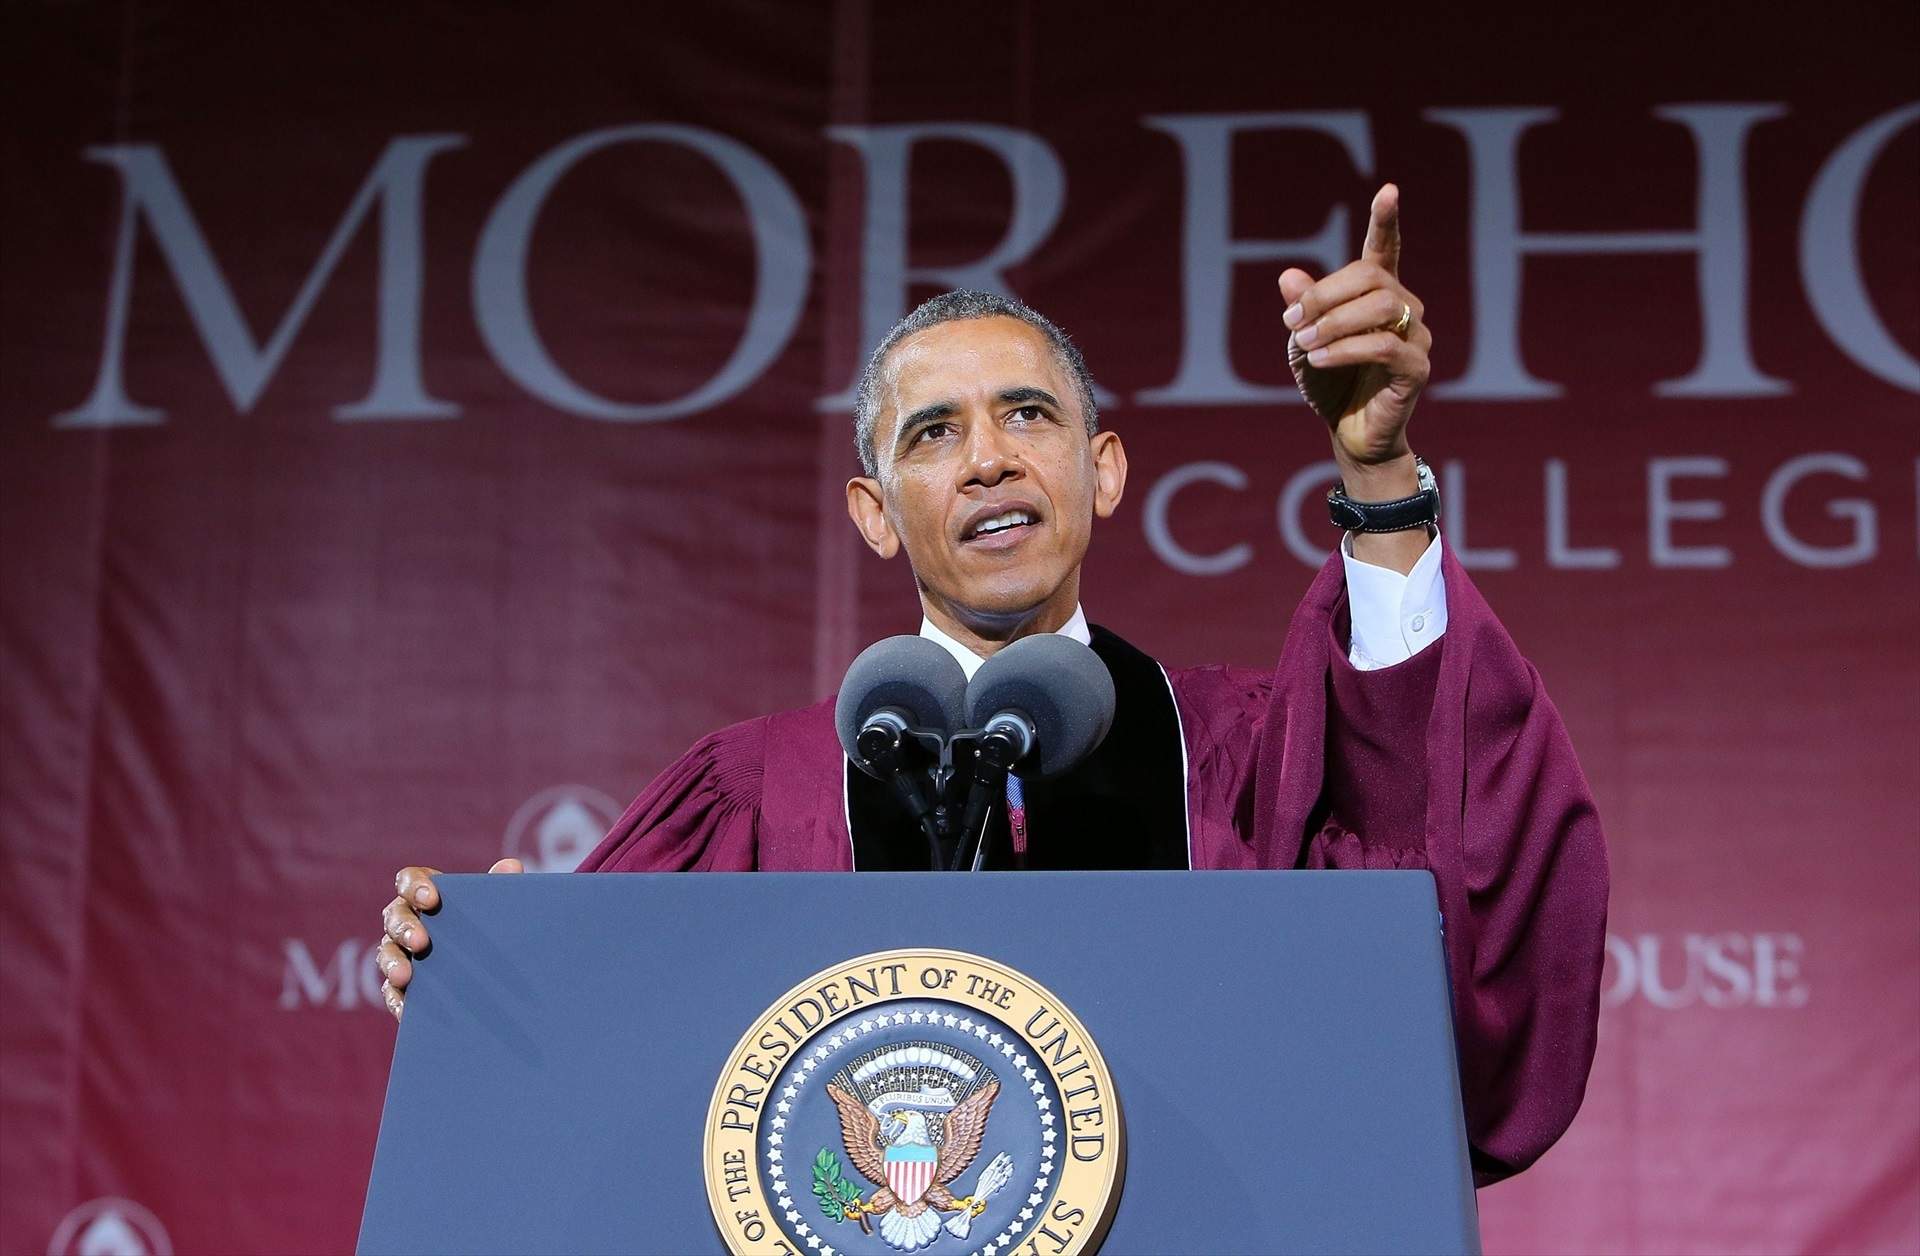 Barack Obama dona suport a Kamala Harris com a candidata demòcrata a la presidència